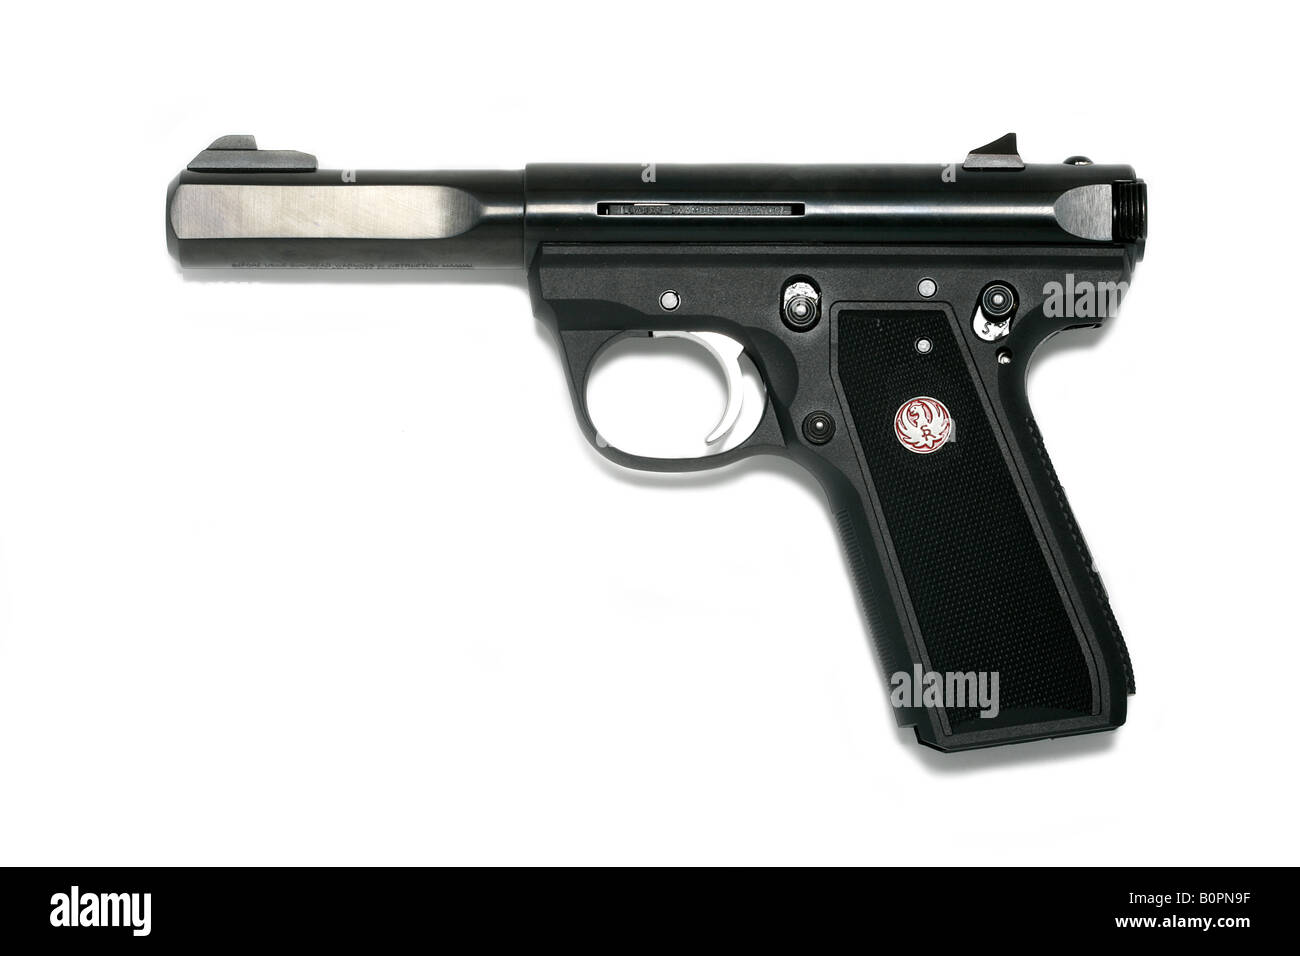 Ruger 22 LR hand gun handgun pistol Stock Photo